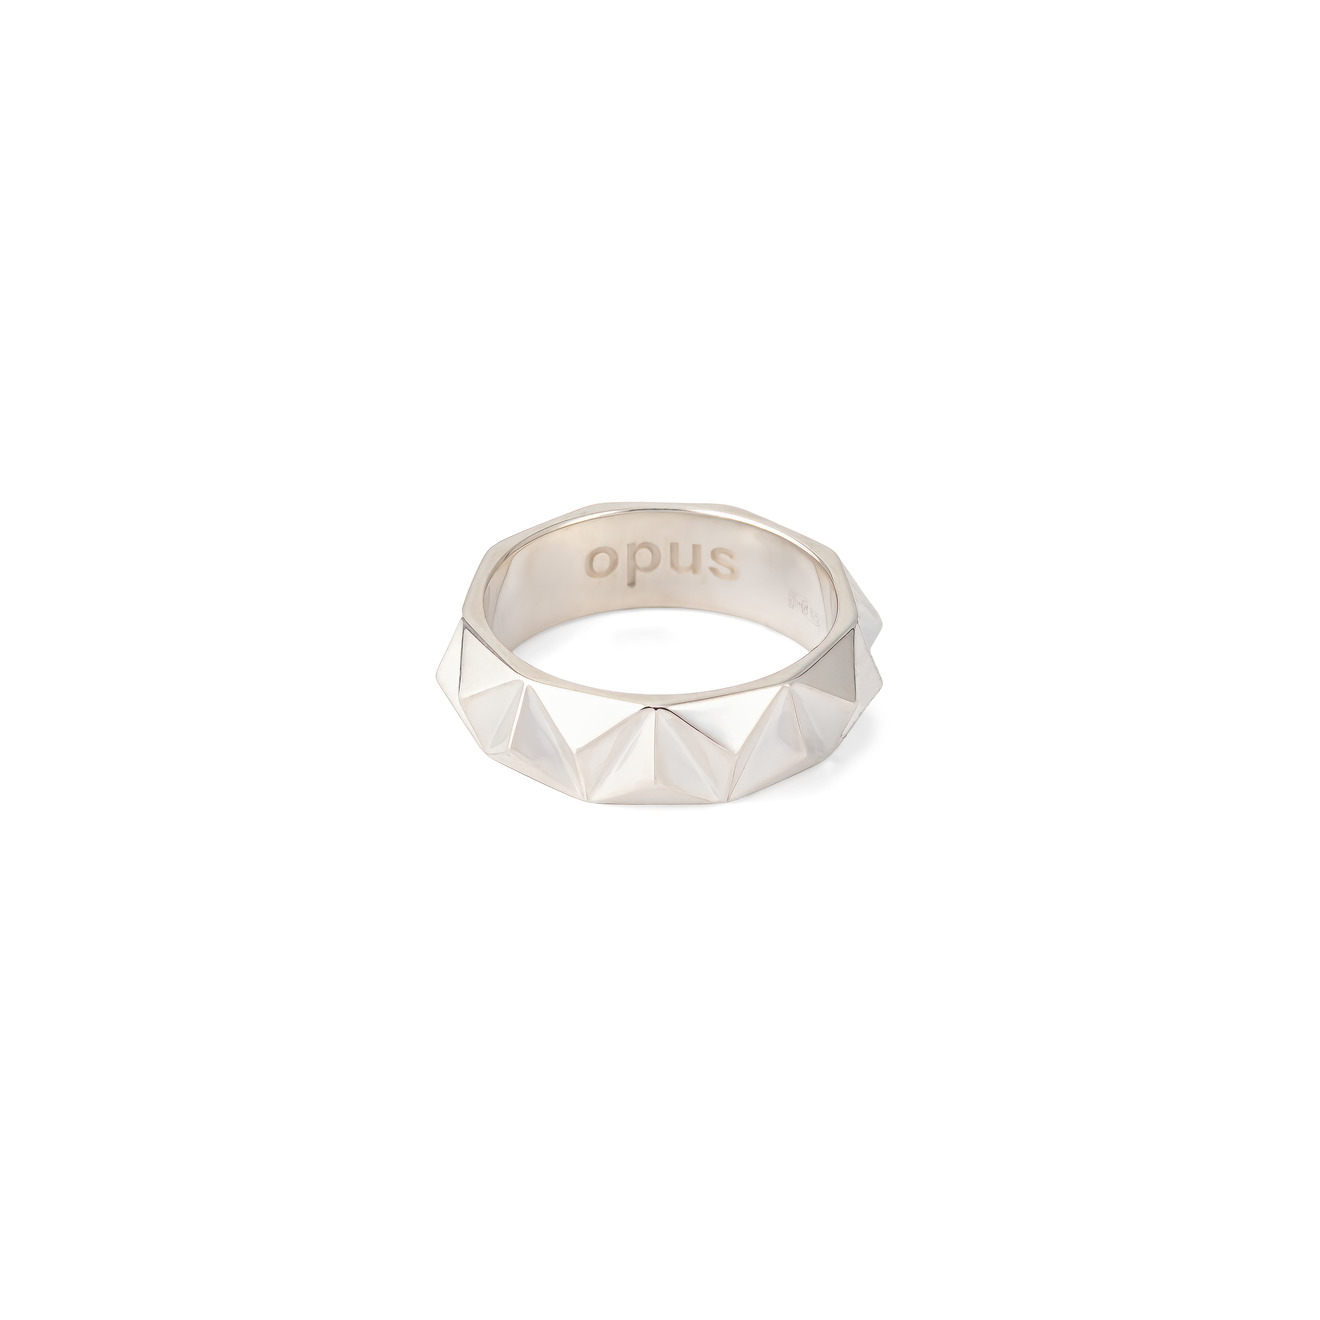 Opus Jewelry Кольцо из серебра с гранями Razor Band Ring 6.5 мм opus jewelry моносерьга из серебра net cross earring с топазом